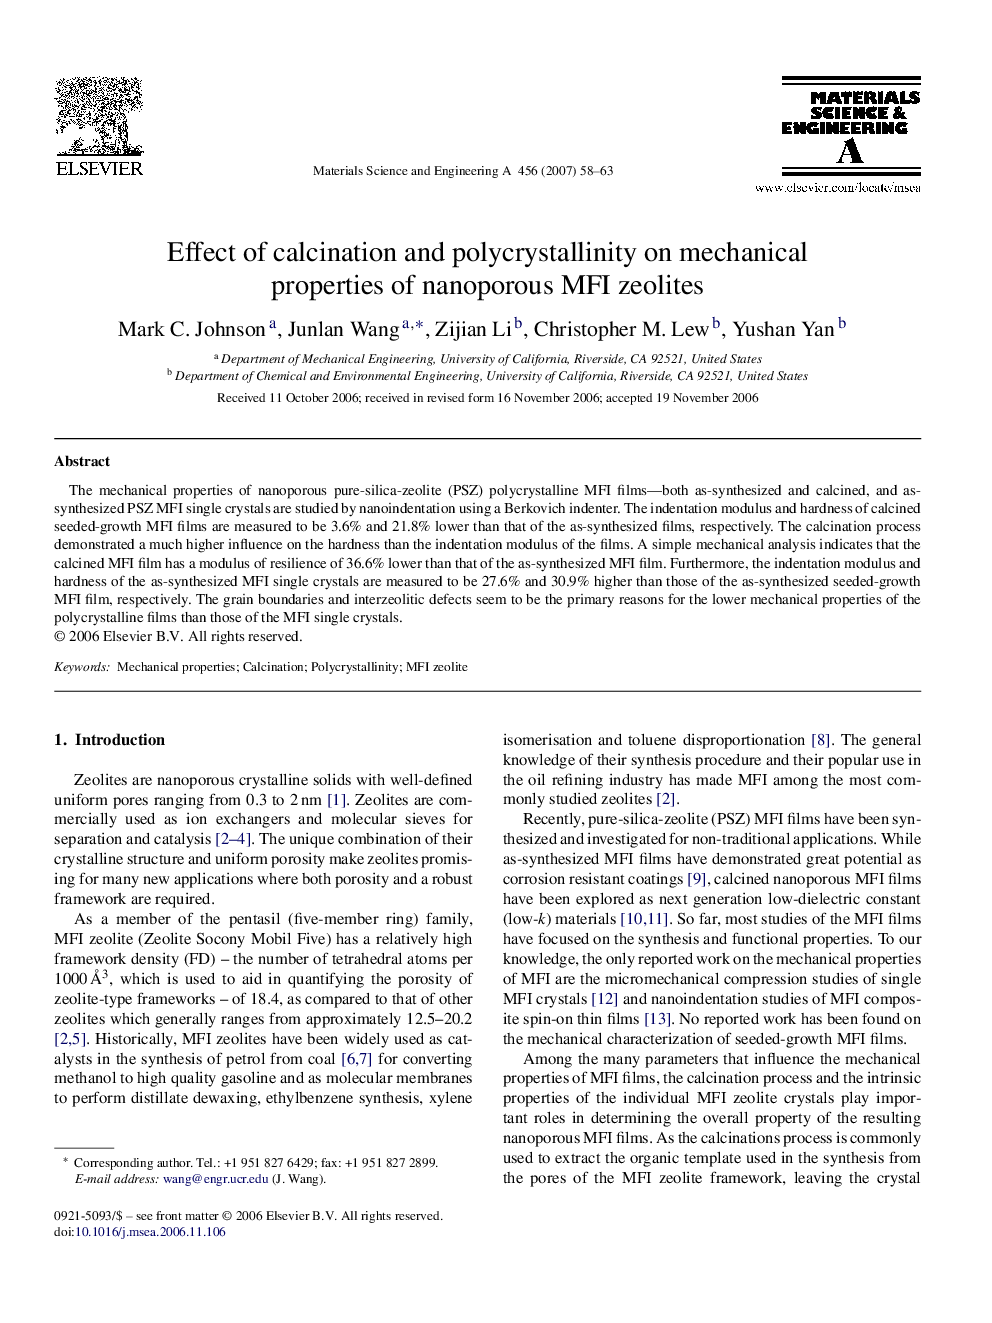 Effect of calcination and polycrystallinity on mechanical properties of nanoporous MFI zeolites